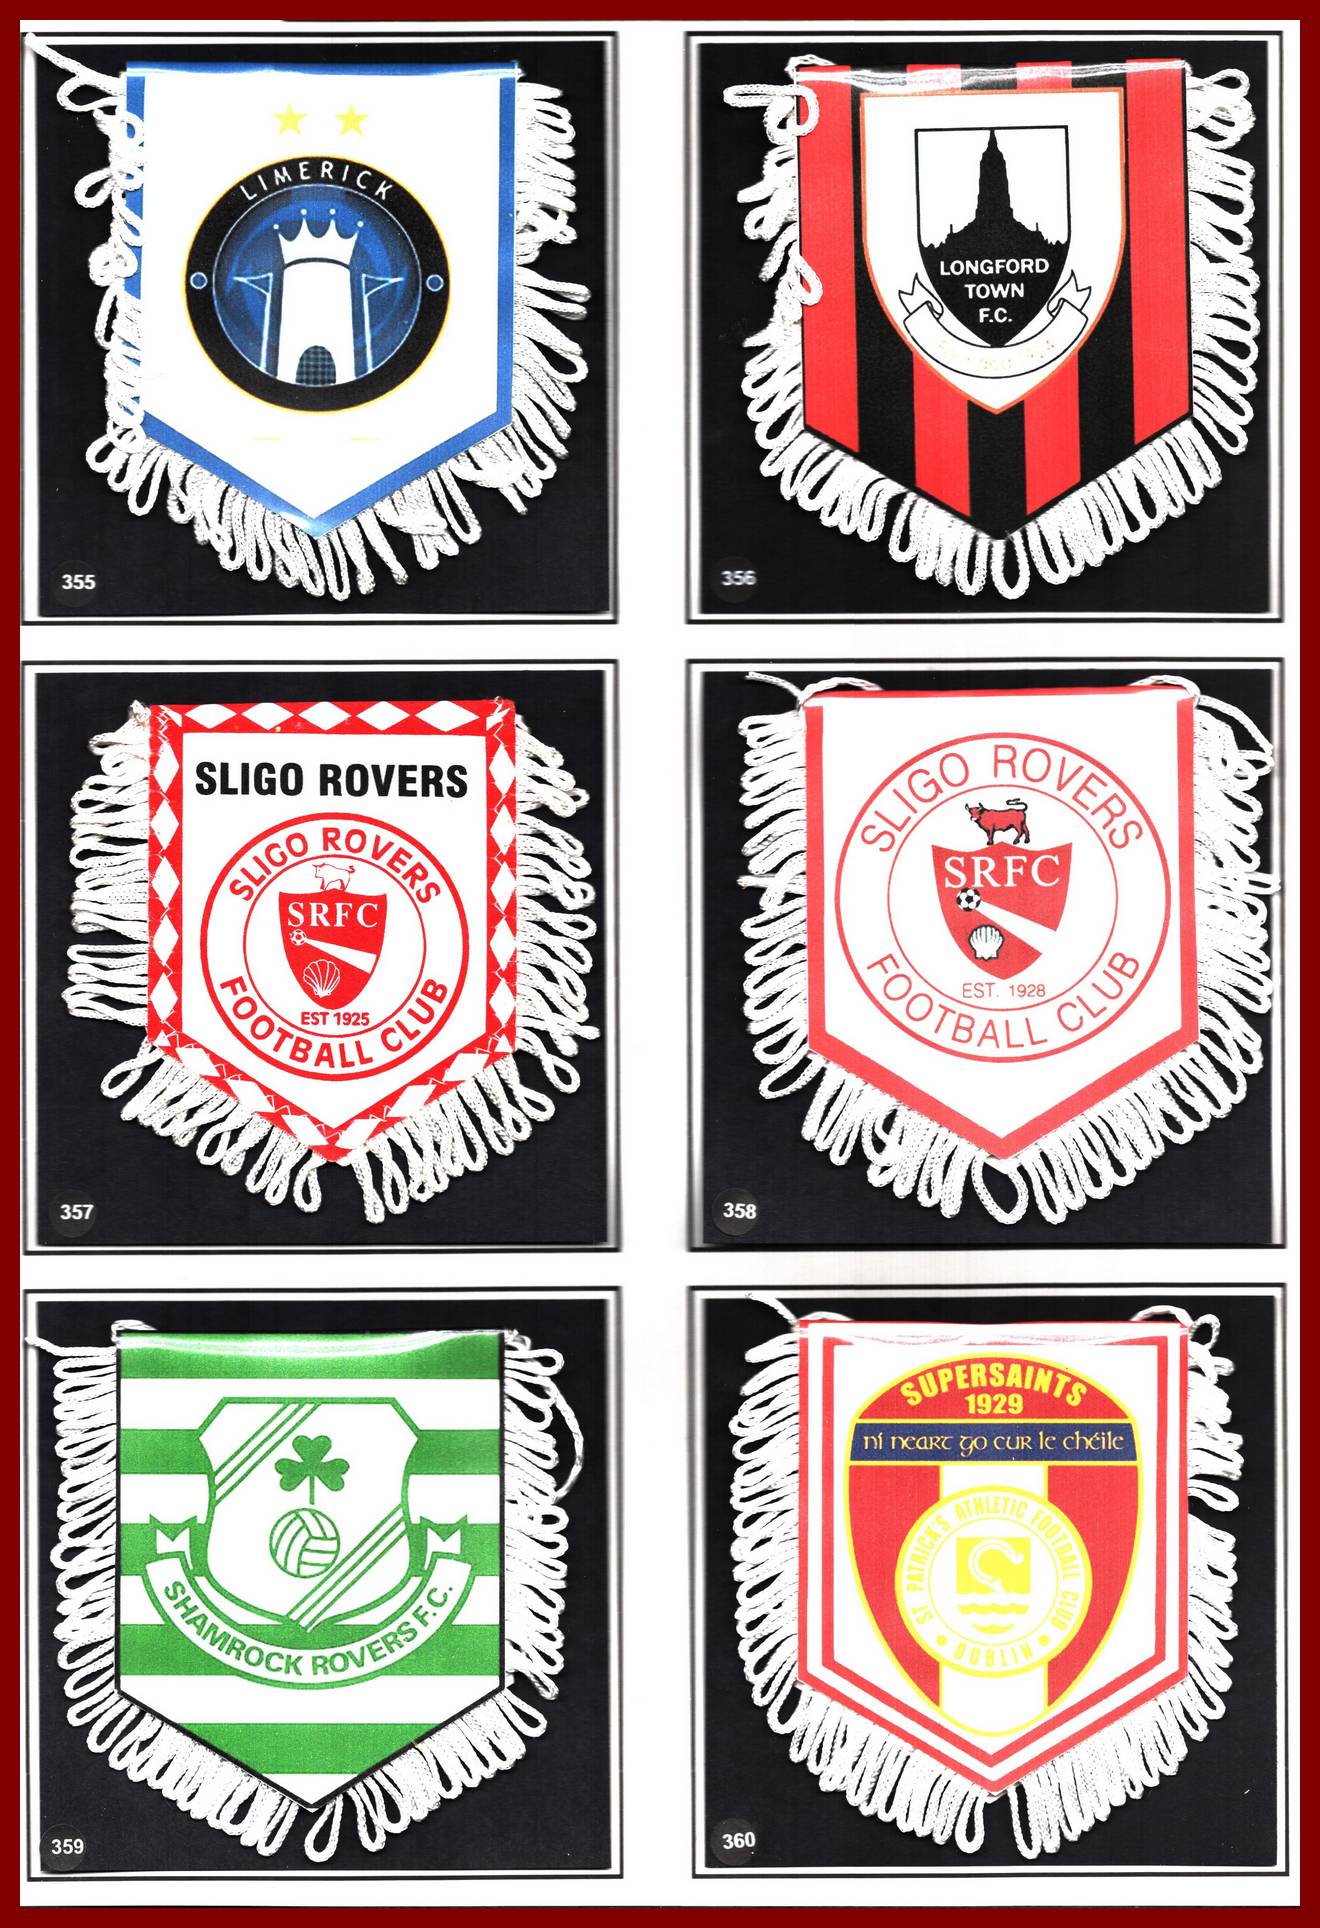 Photo 688 IRLANDE (Page 03): Limerick - Longford Town - Sligo Rovers - Shamrock Rovers - saint-Patrick AFC